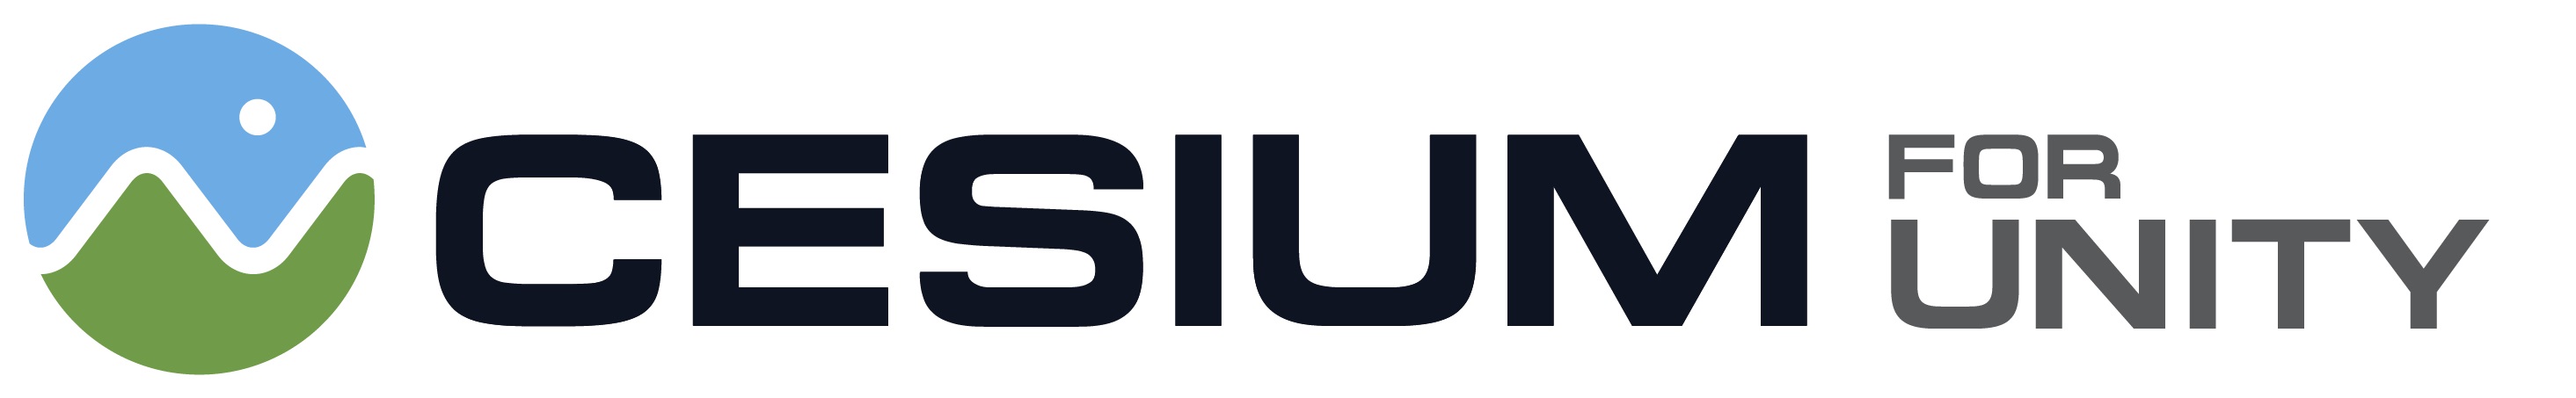 Cesium for Unity Logo